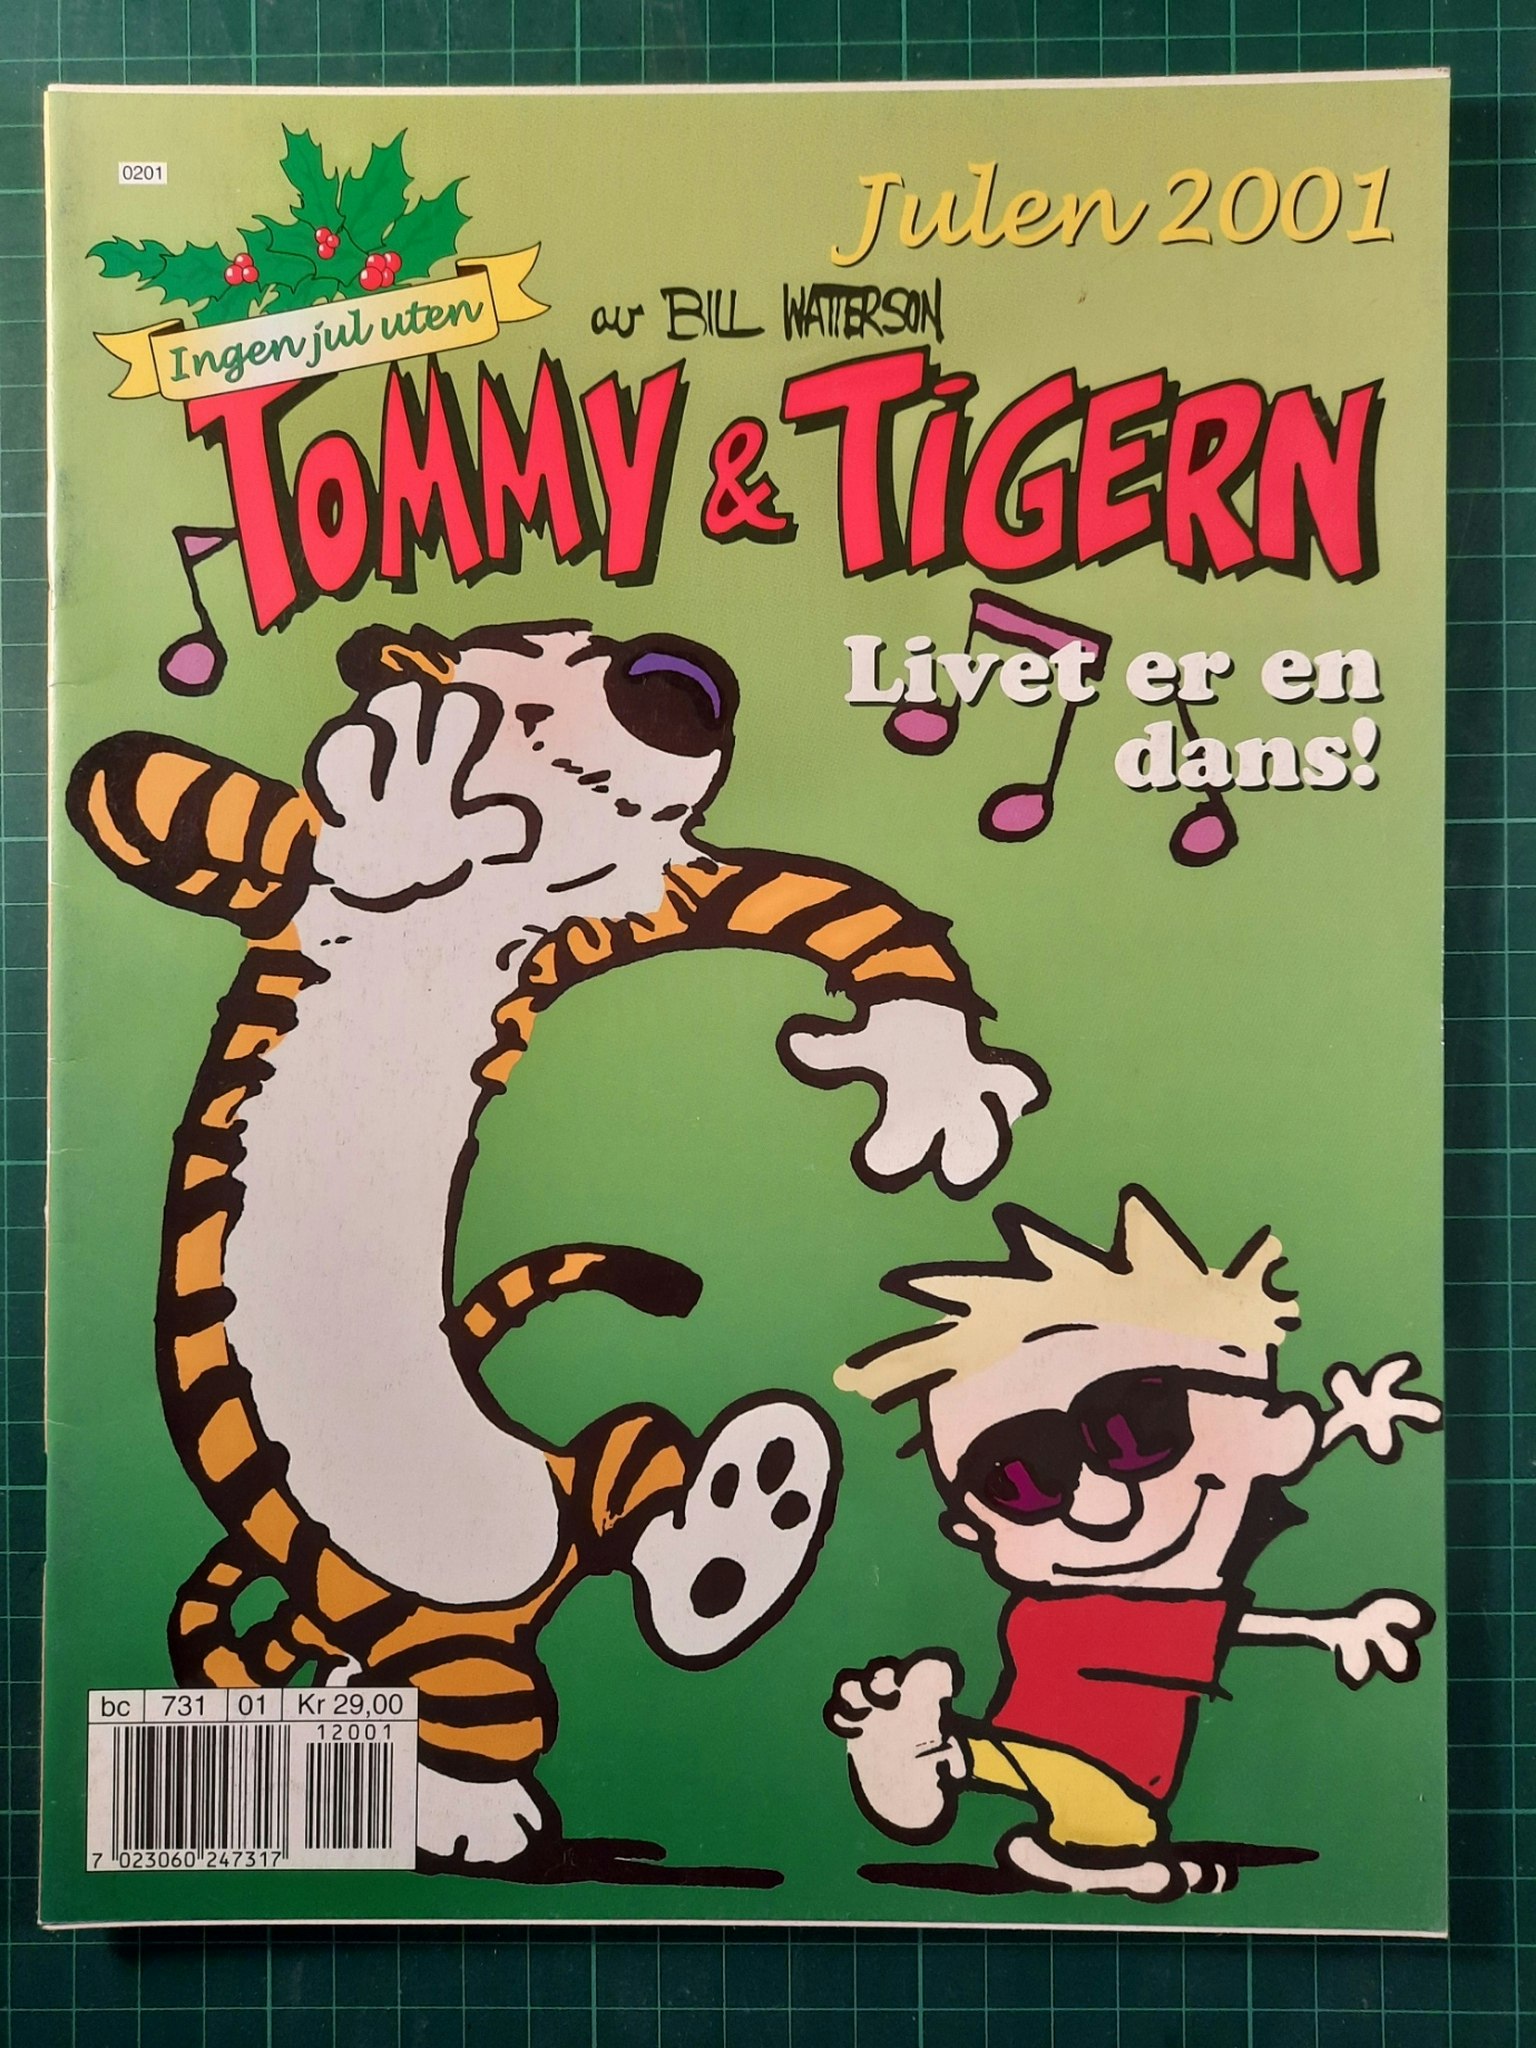 Tommy & Tigern julen 2001